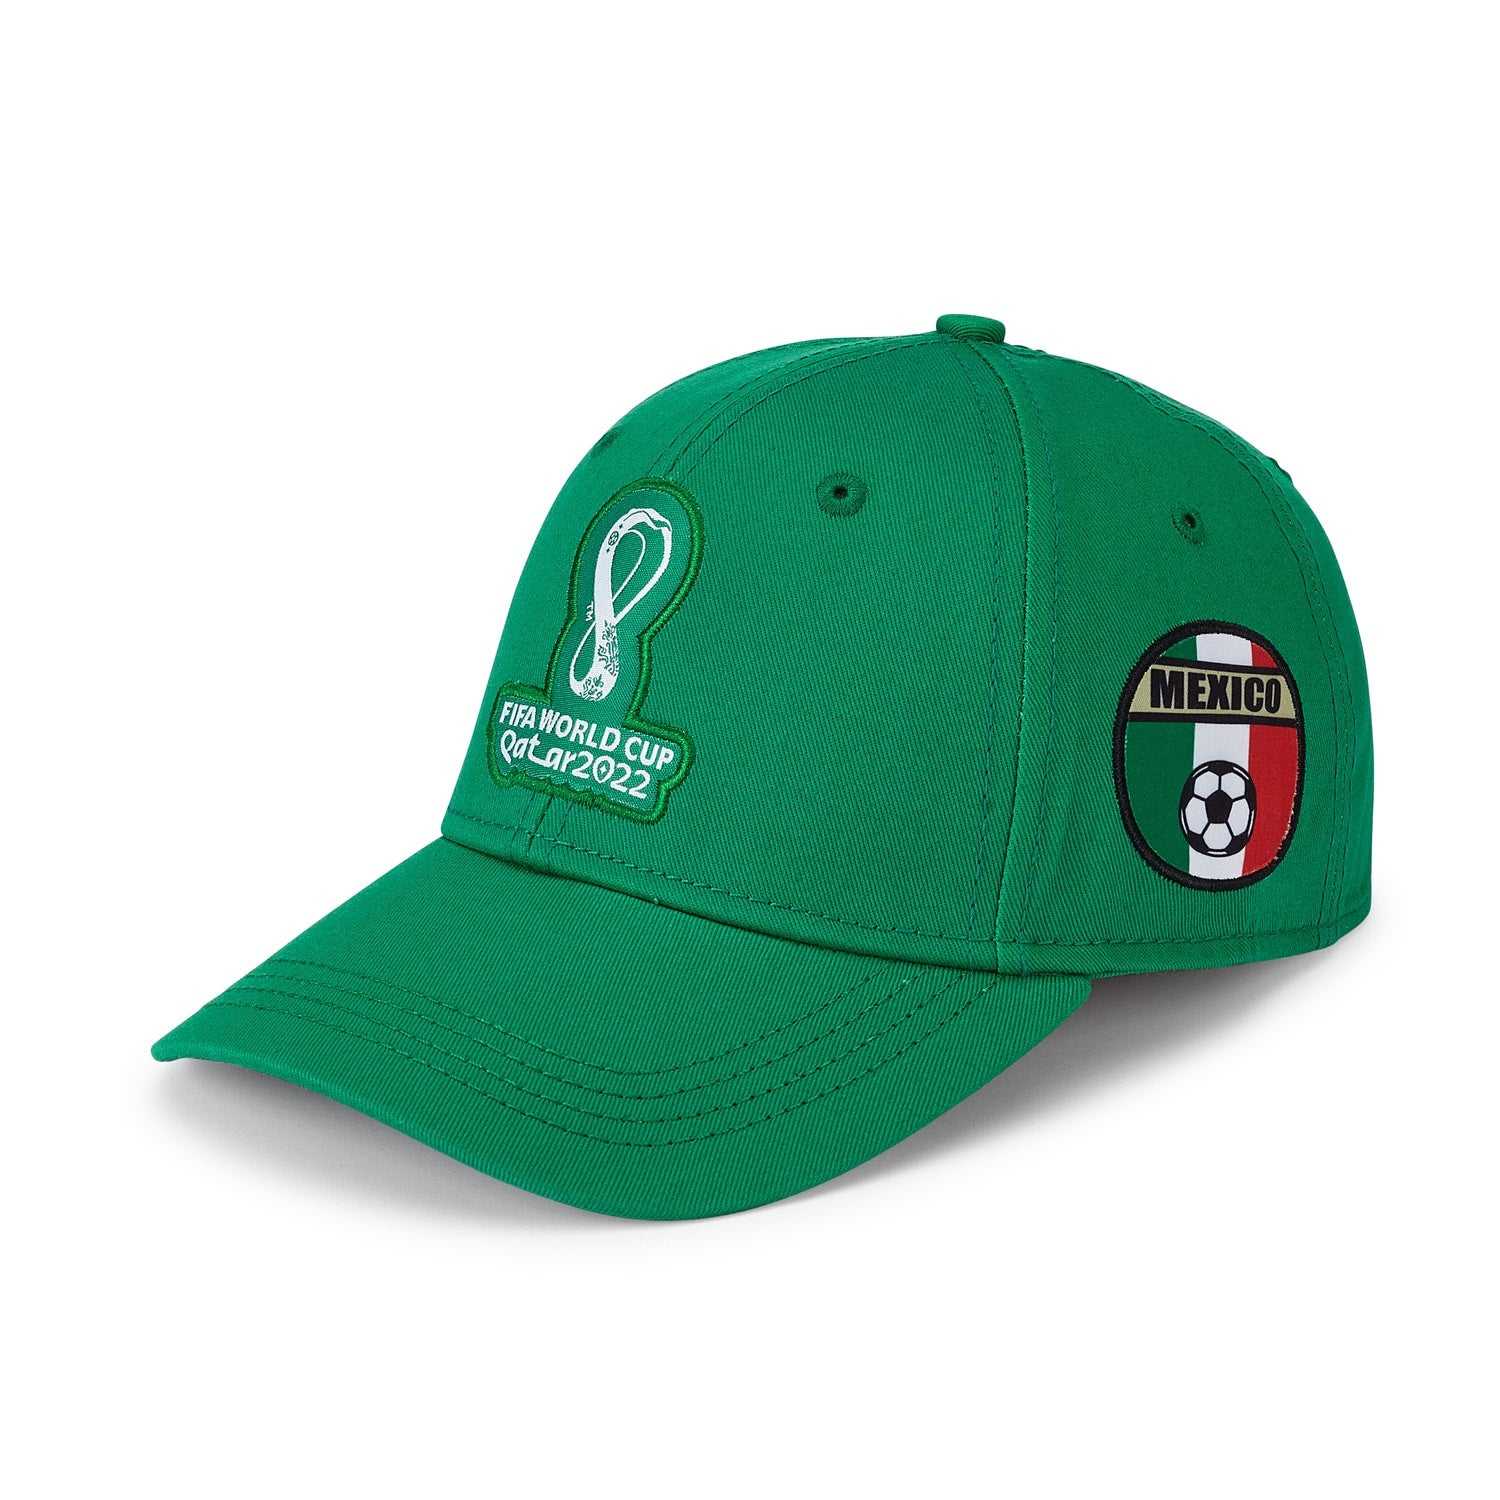 2022 World Cup Mexico Green Cap - Mens